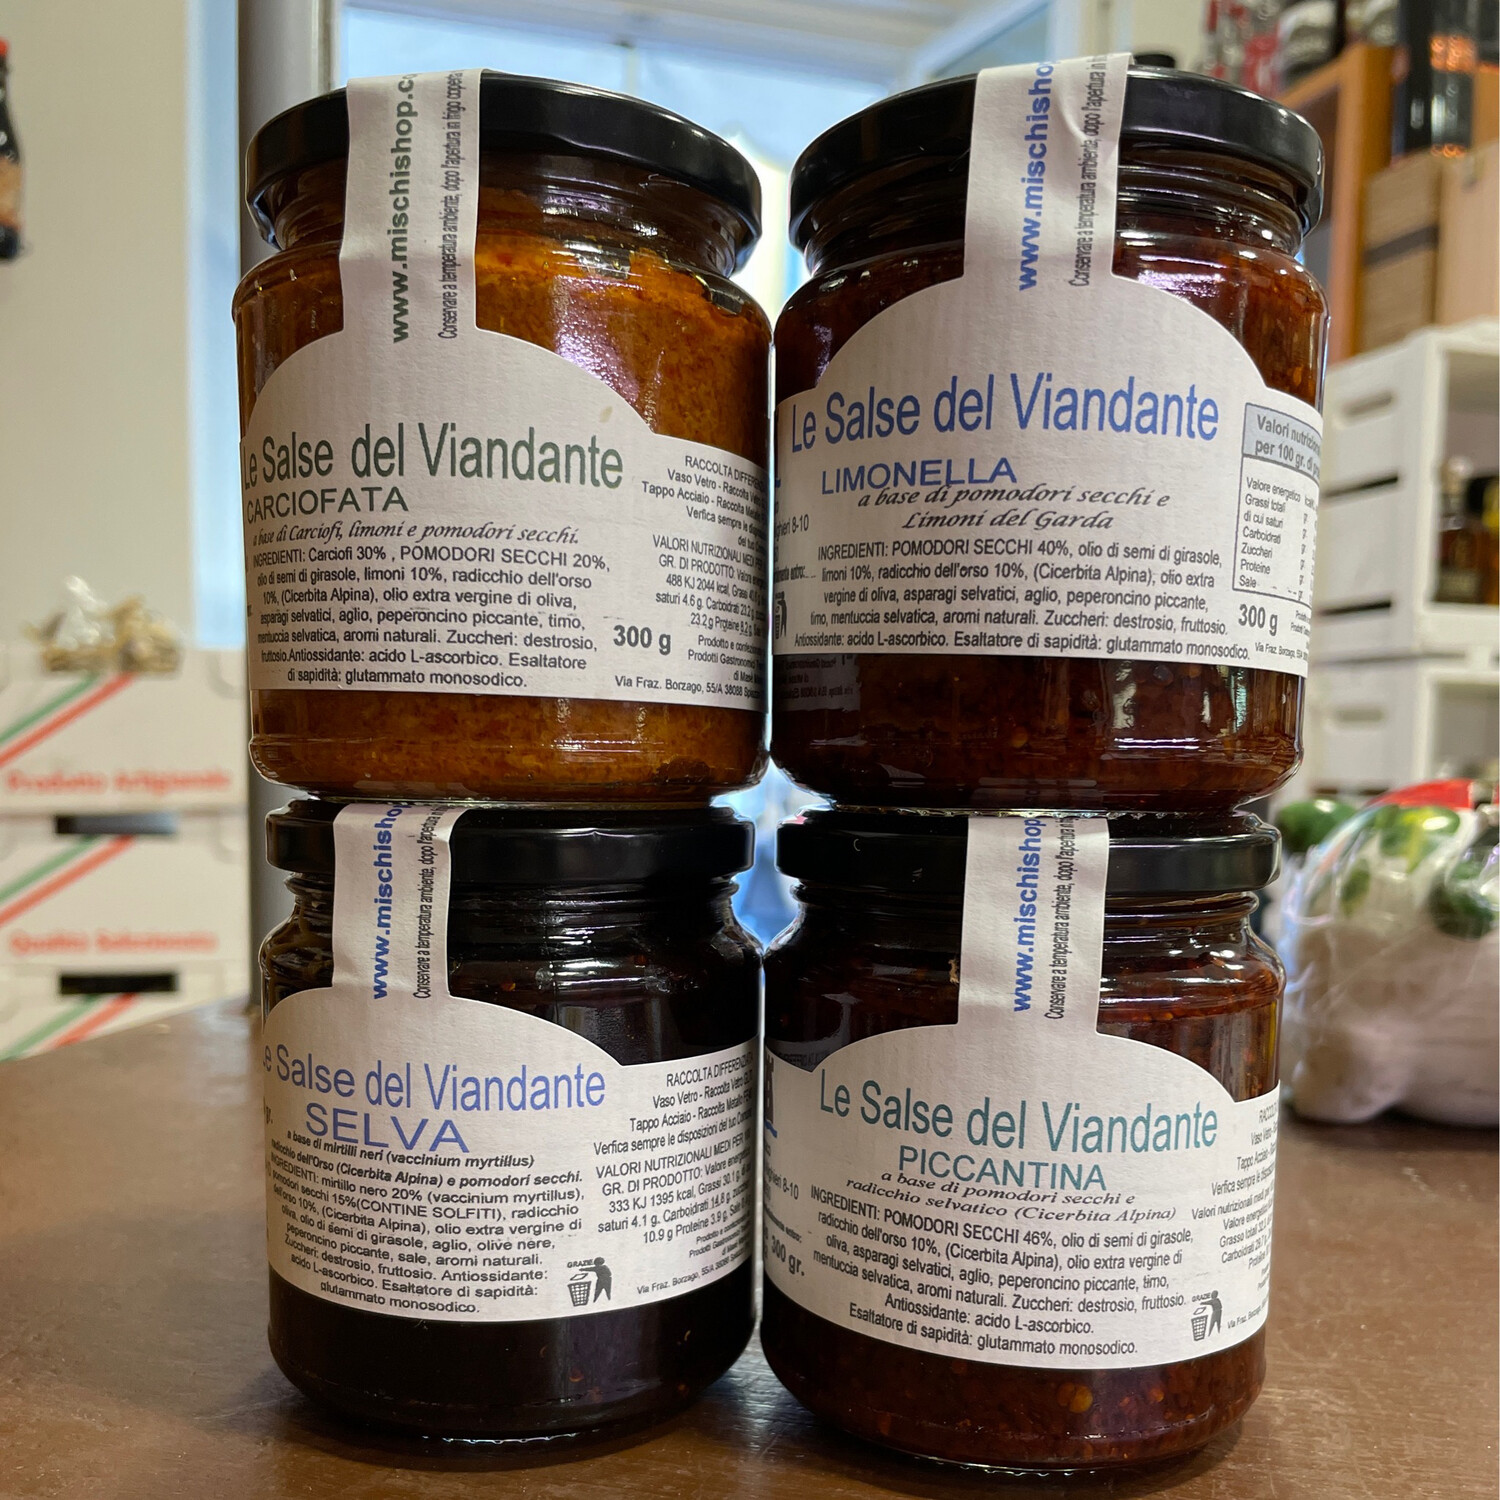 4 jars of assorted "salse del viandante"